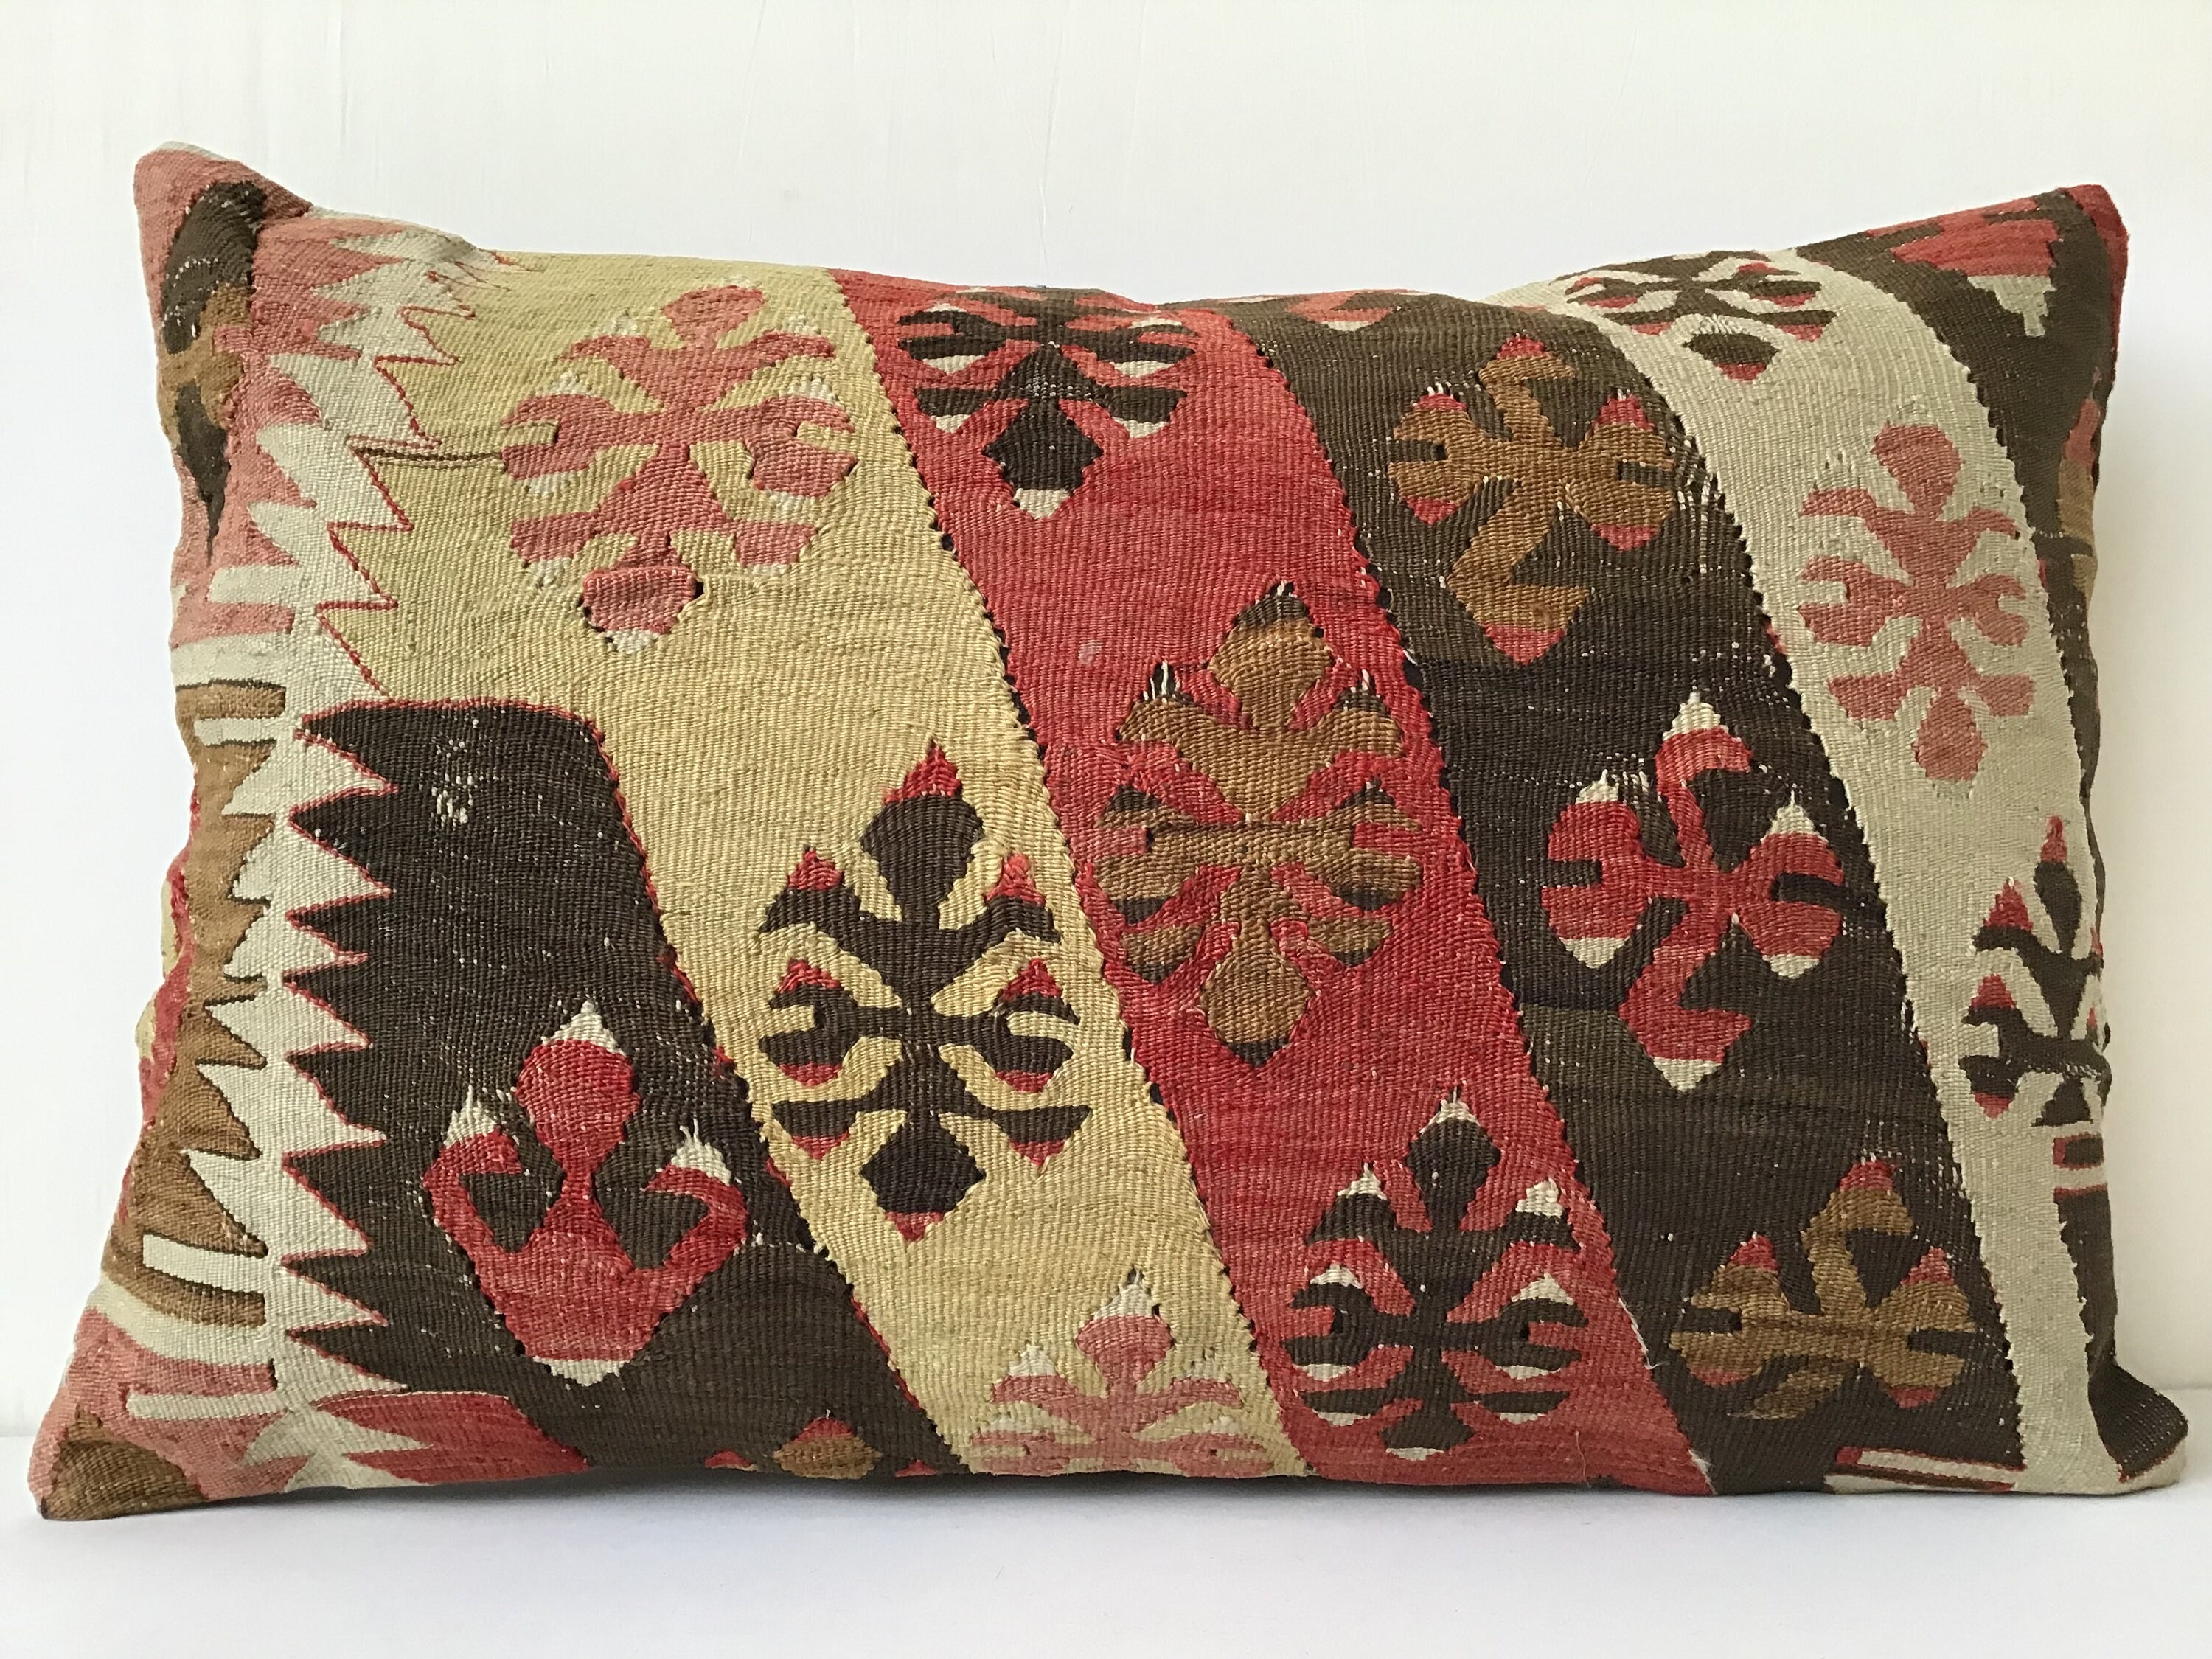 60x40 cm 24x16 inch,Kilim Pillow Case,Kilim Pillow,Carpet Pillow,Moroccon Pillow,Decorative Pillow,Ethnic Pillow,Antique Pillows,Rug Pillows